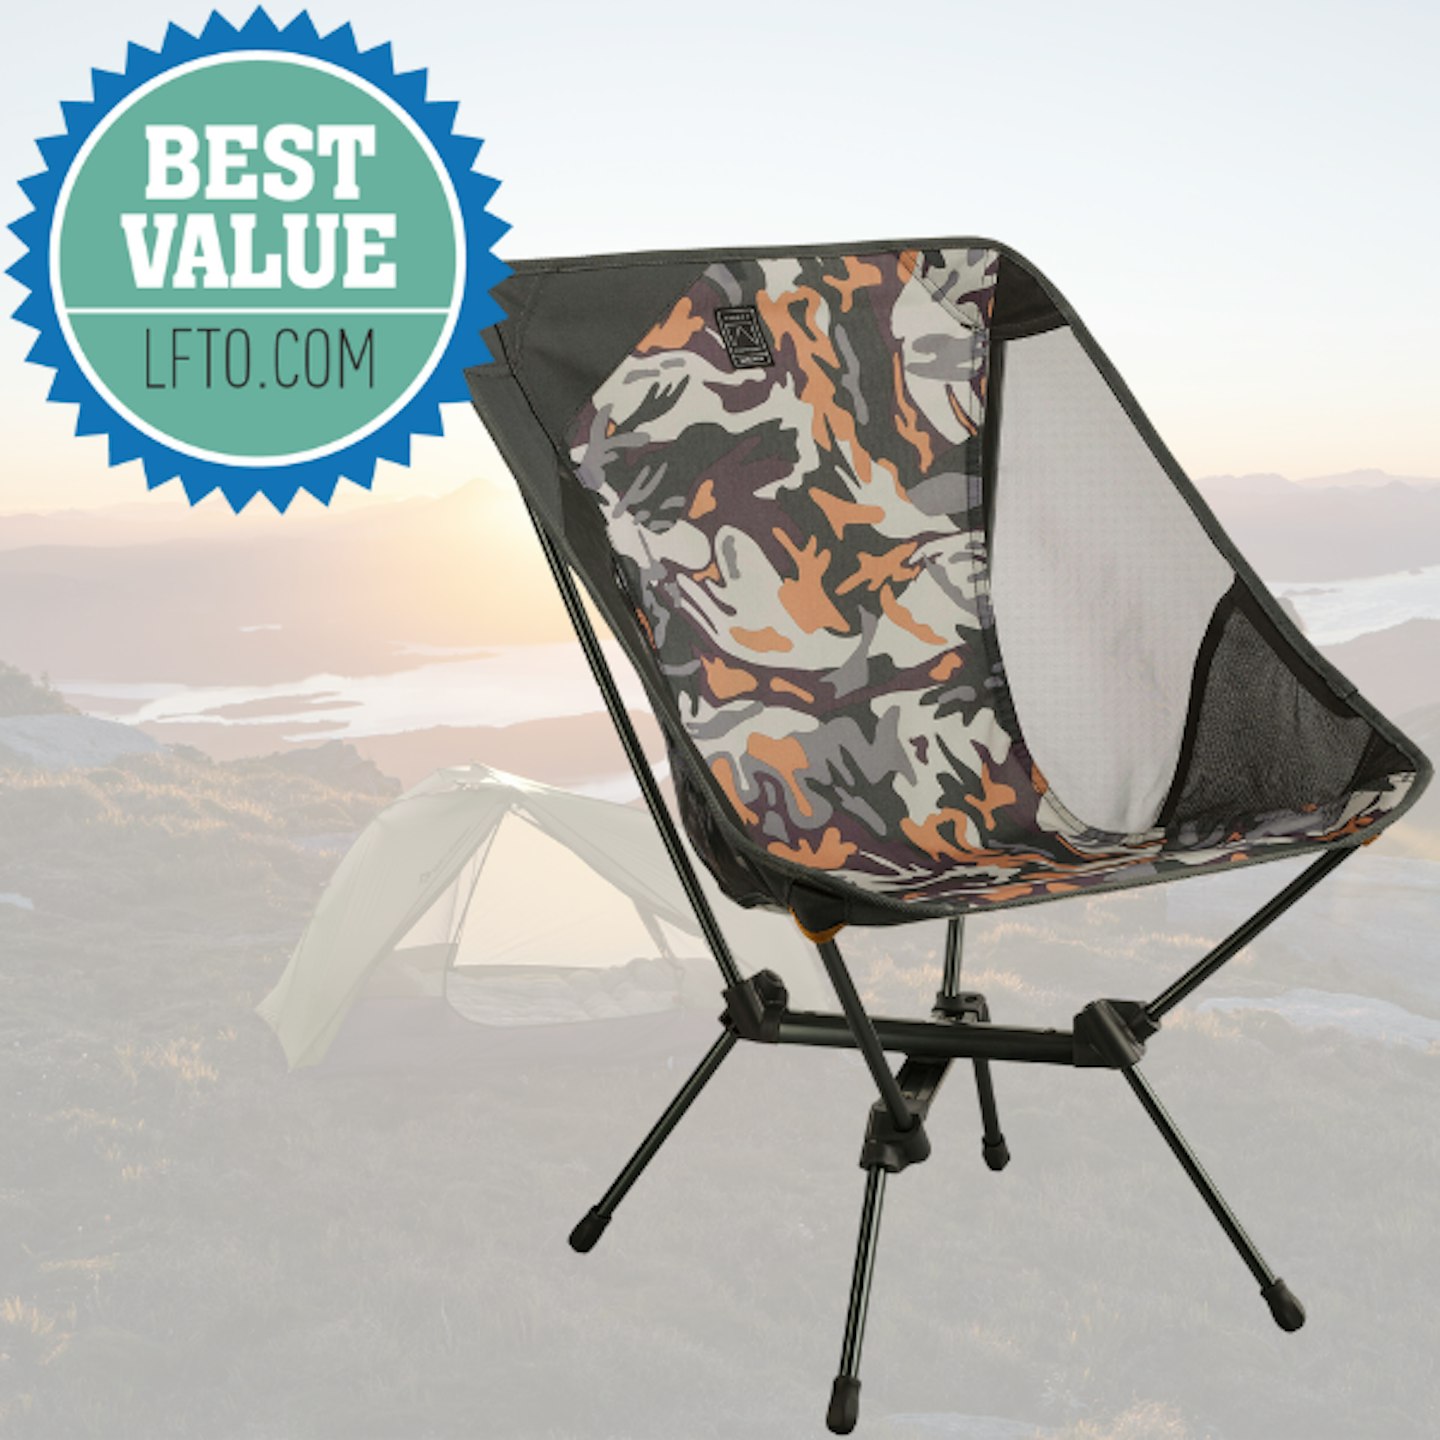 Quechua Folding Camping Chair MH500 with award logo overlay